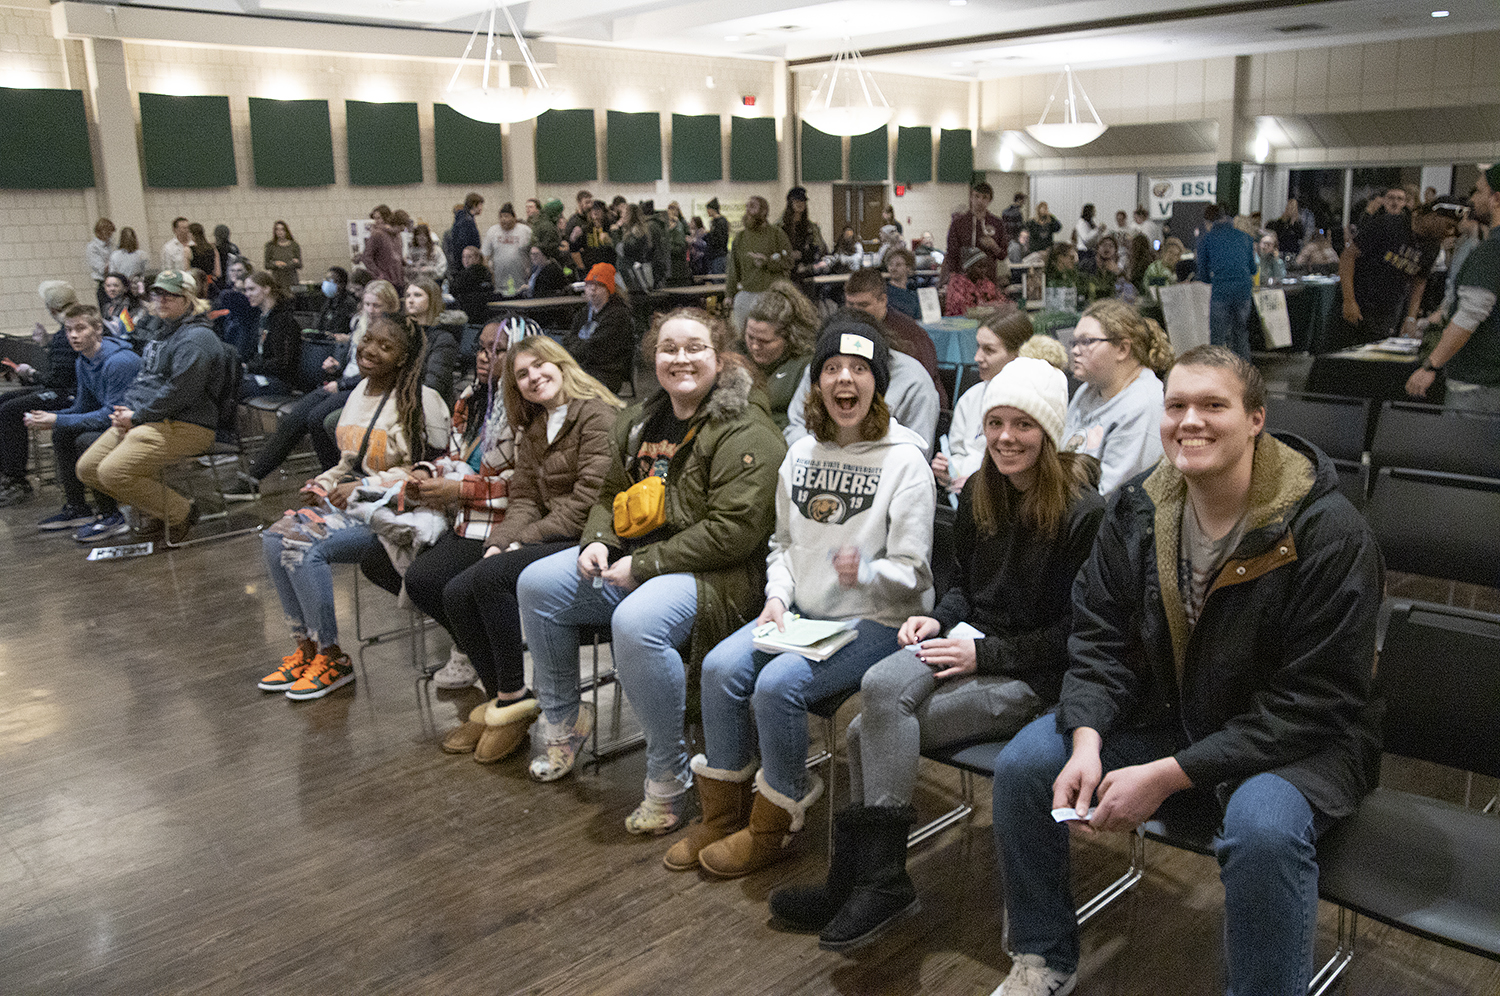 Students at the Beaver Organization Bash on Thursday, January 26